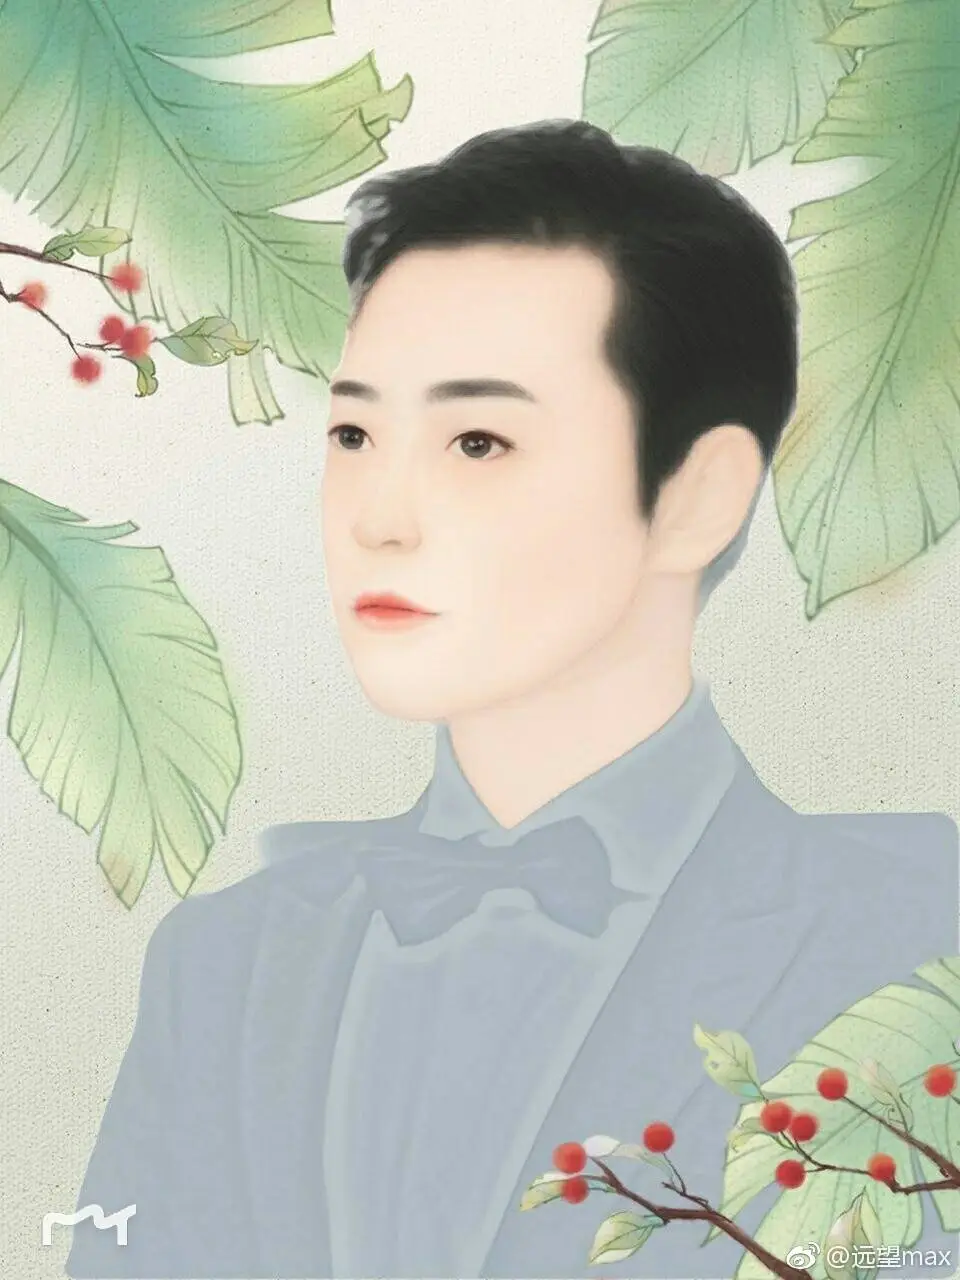 Portraits of Tong Zhang. JPG